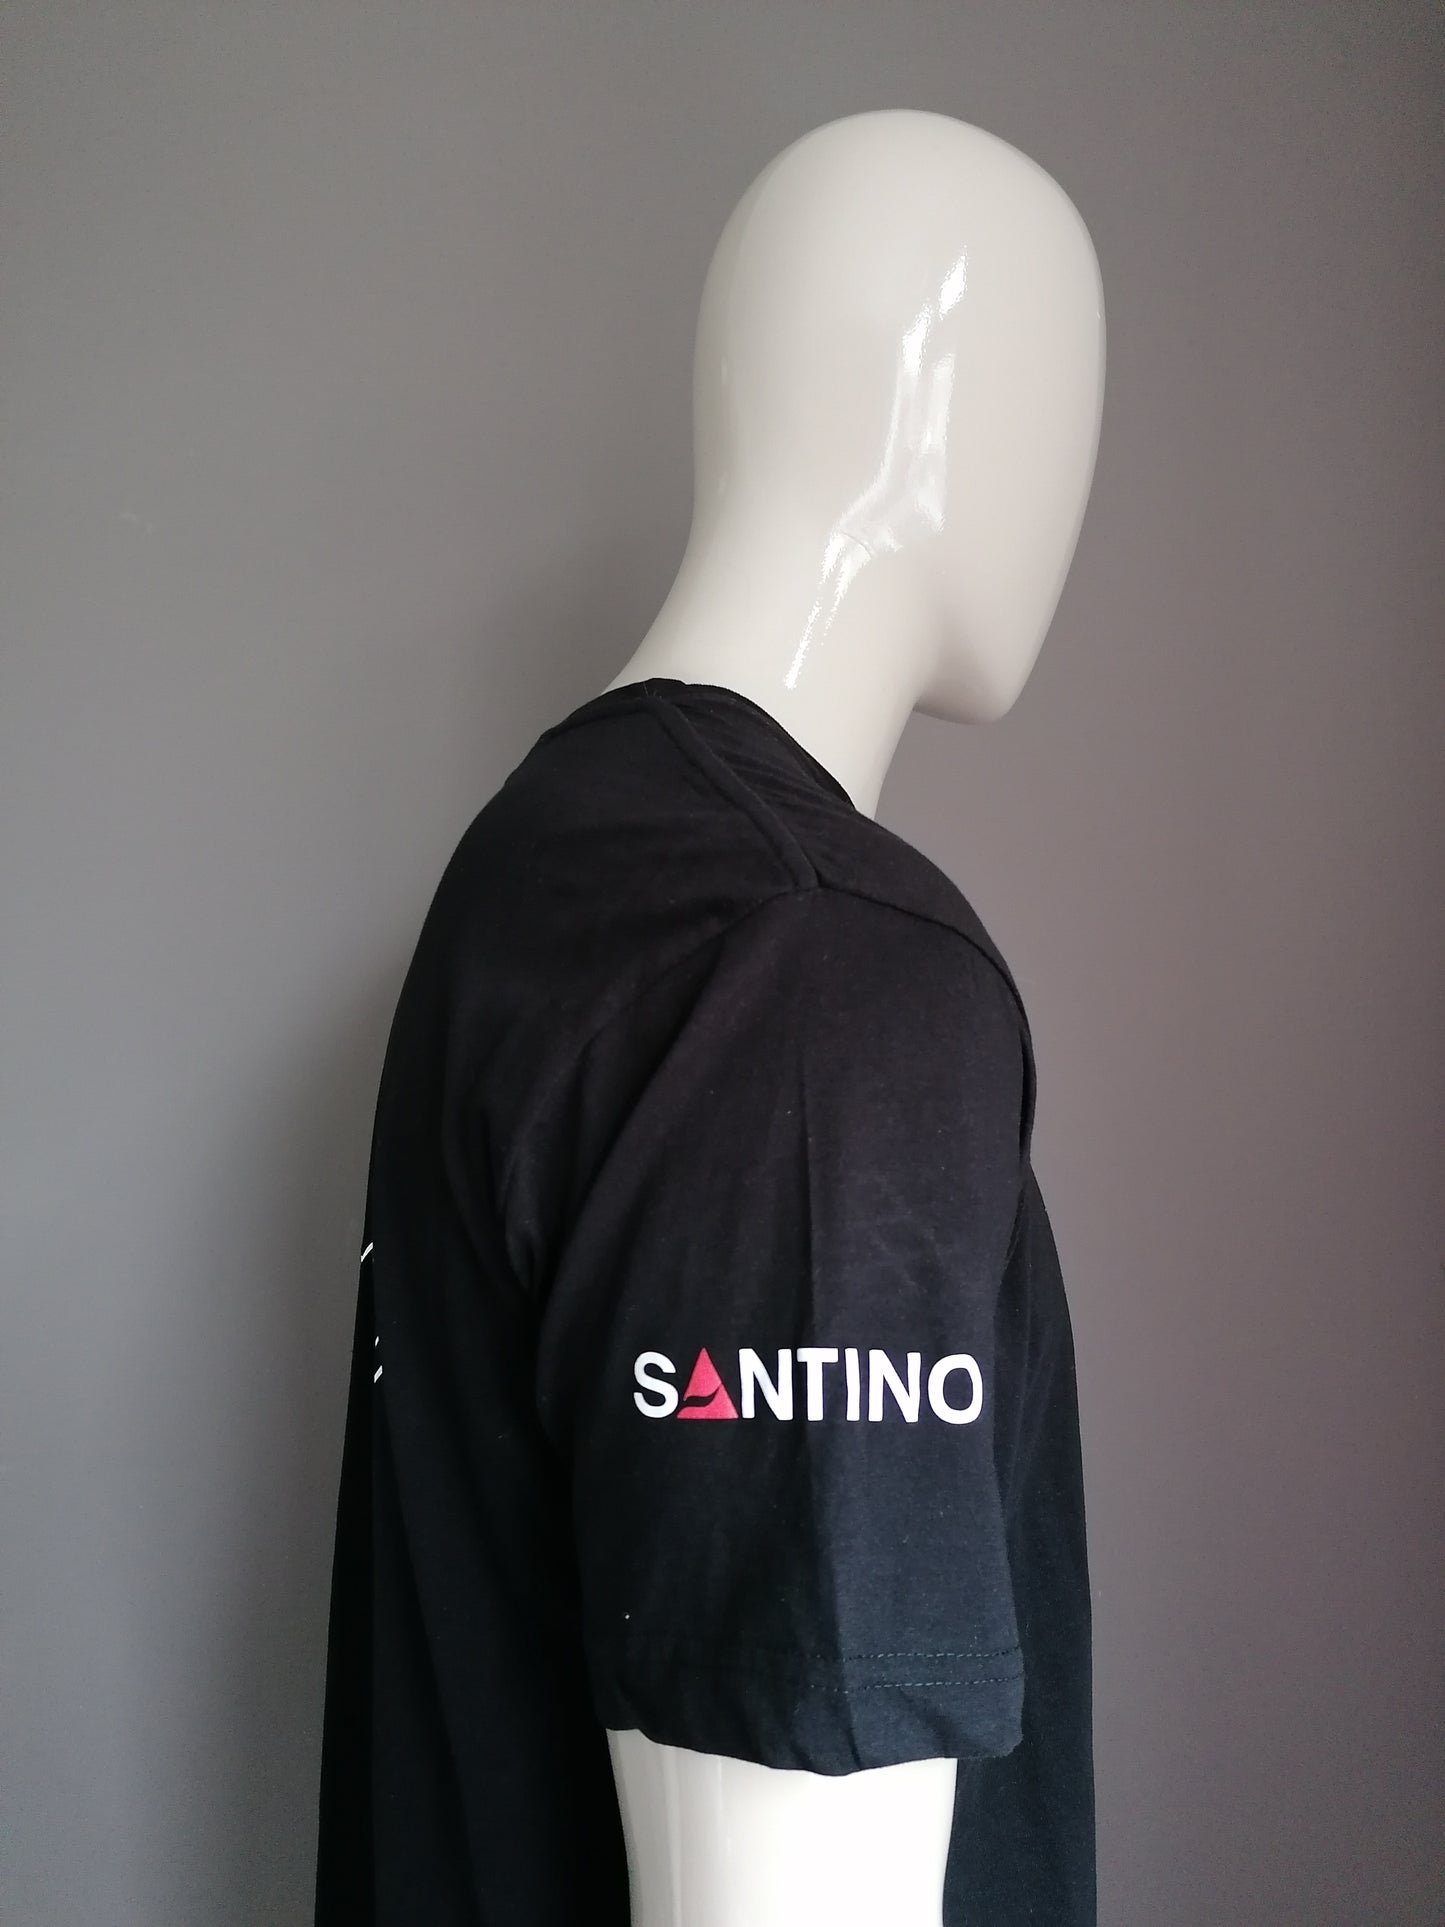 Camisa Santino. Negro de color. Tamaño XL.